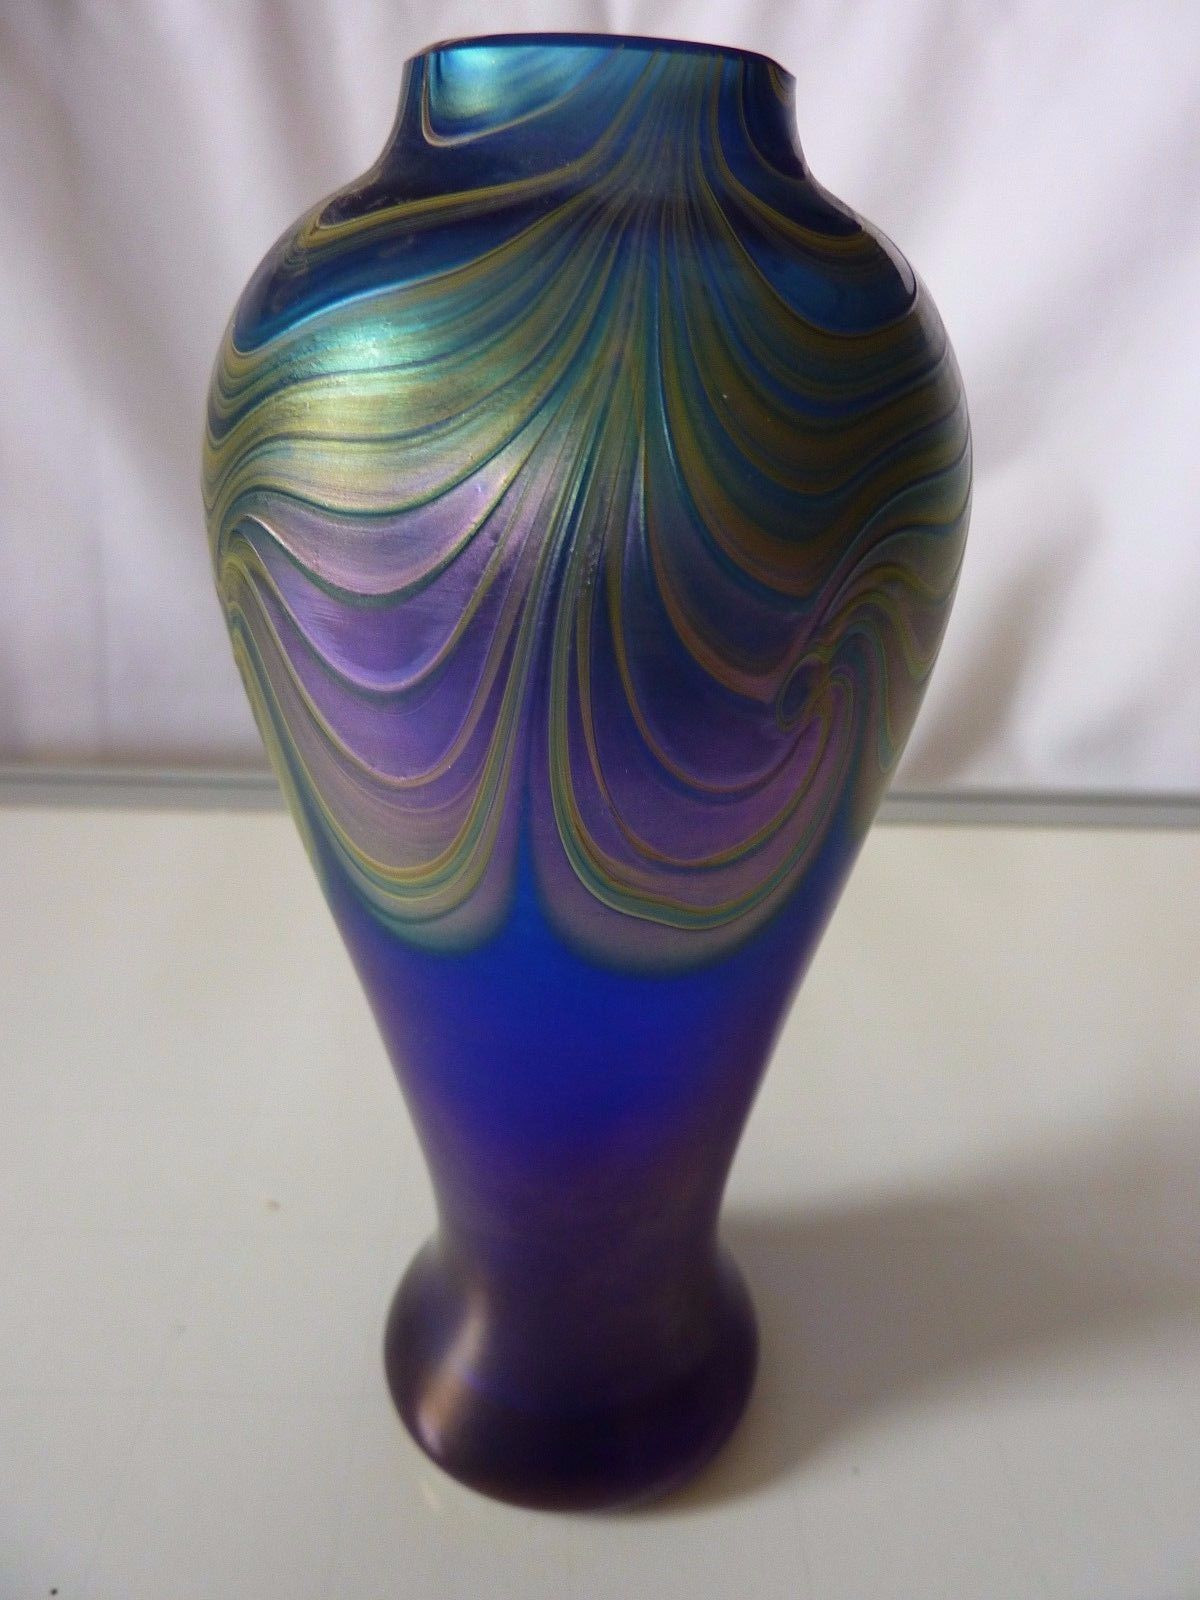 14 Stylish Blue Glass Tall Vase 2024 free download blue glass tall vase of okra glass vase blue and iridescent glassies british okra with regard to okra glass vase blue and iridescent ebay